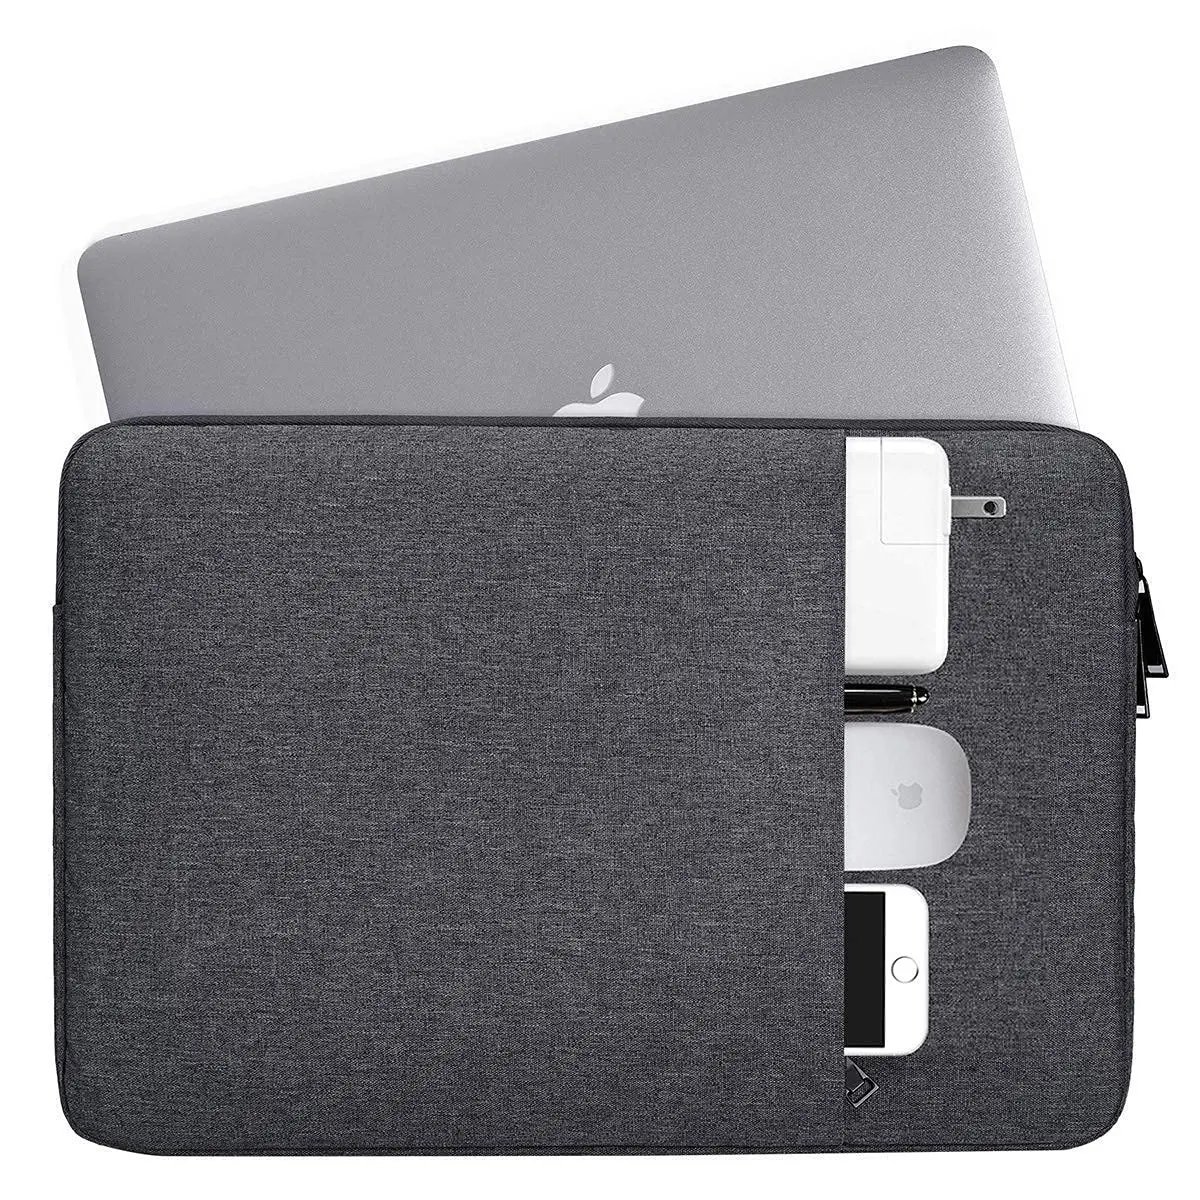 17.3 inch Laptop Sleeve Bag for HP Pavilion 17/HP Envy 17/HP